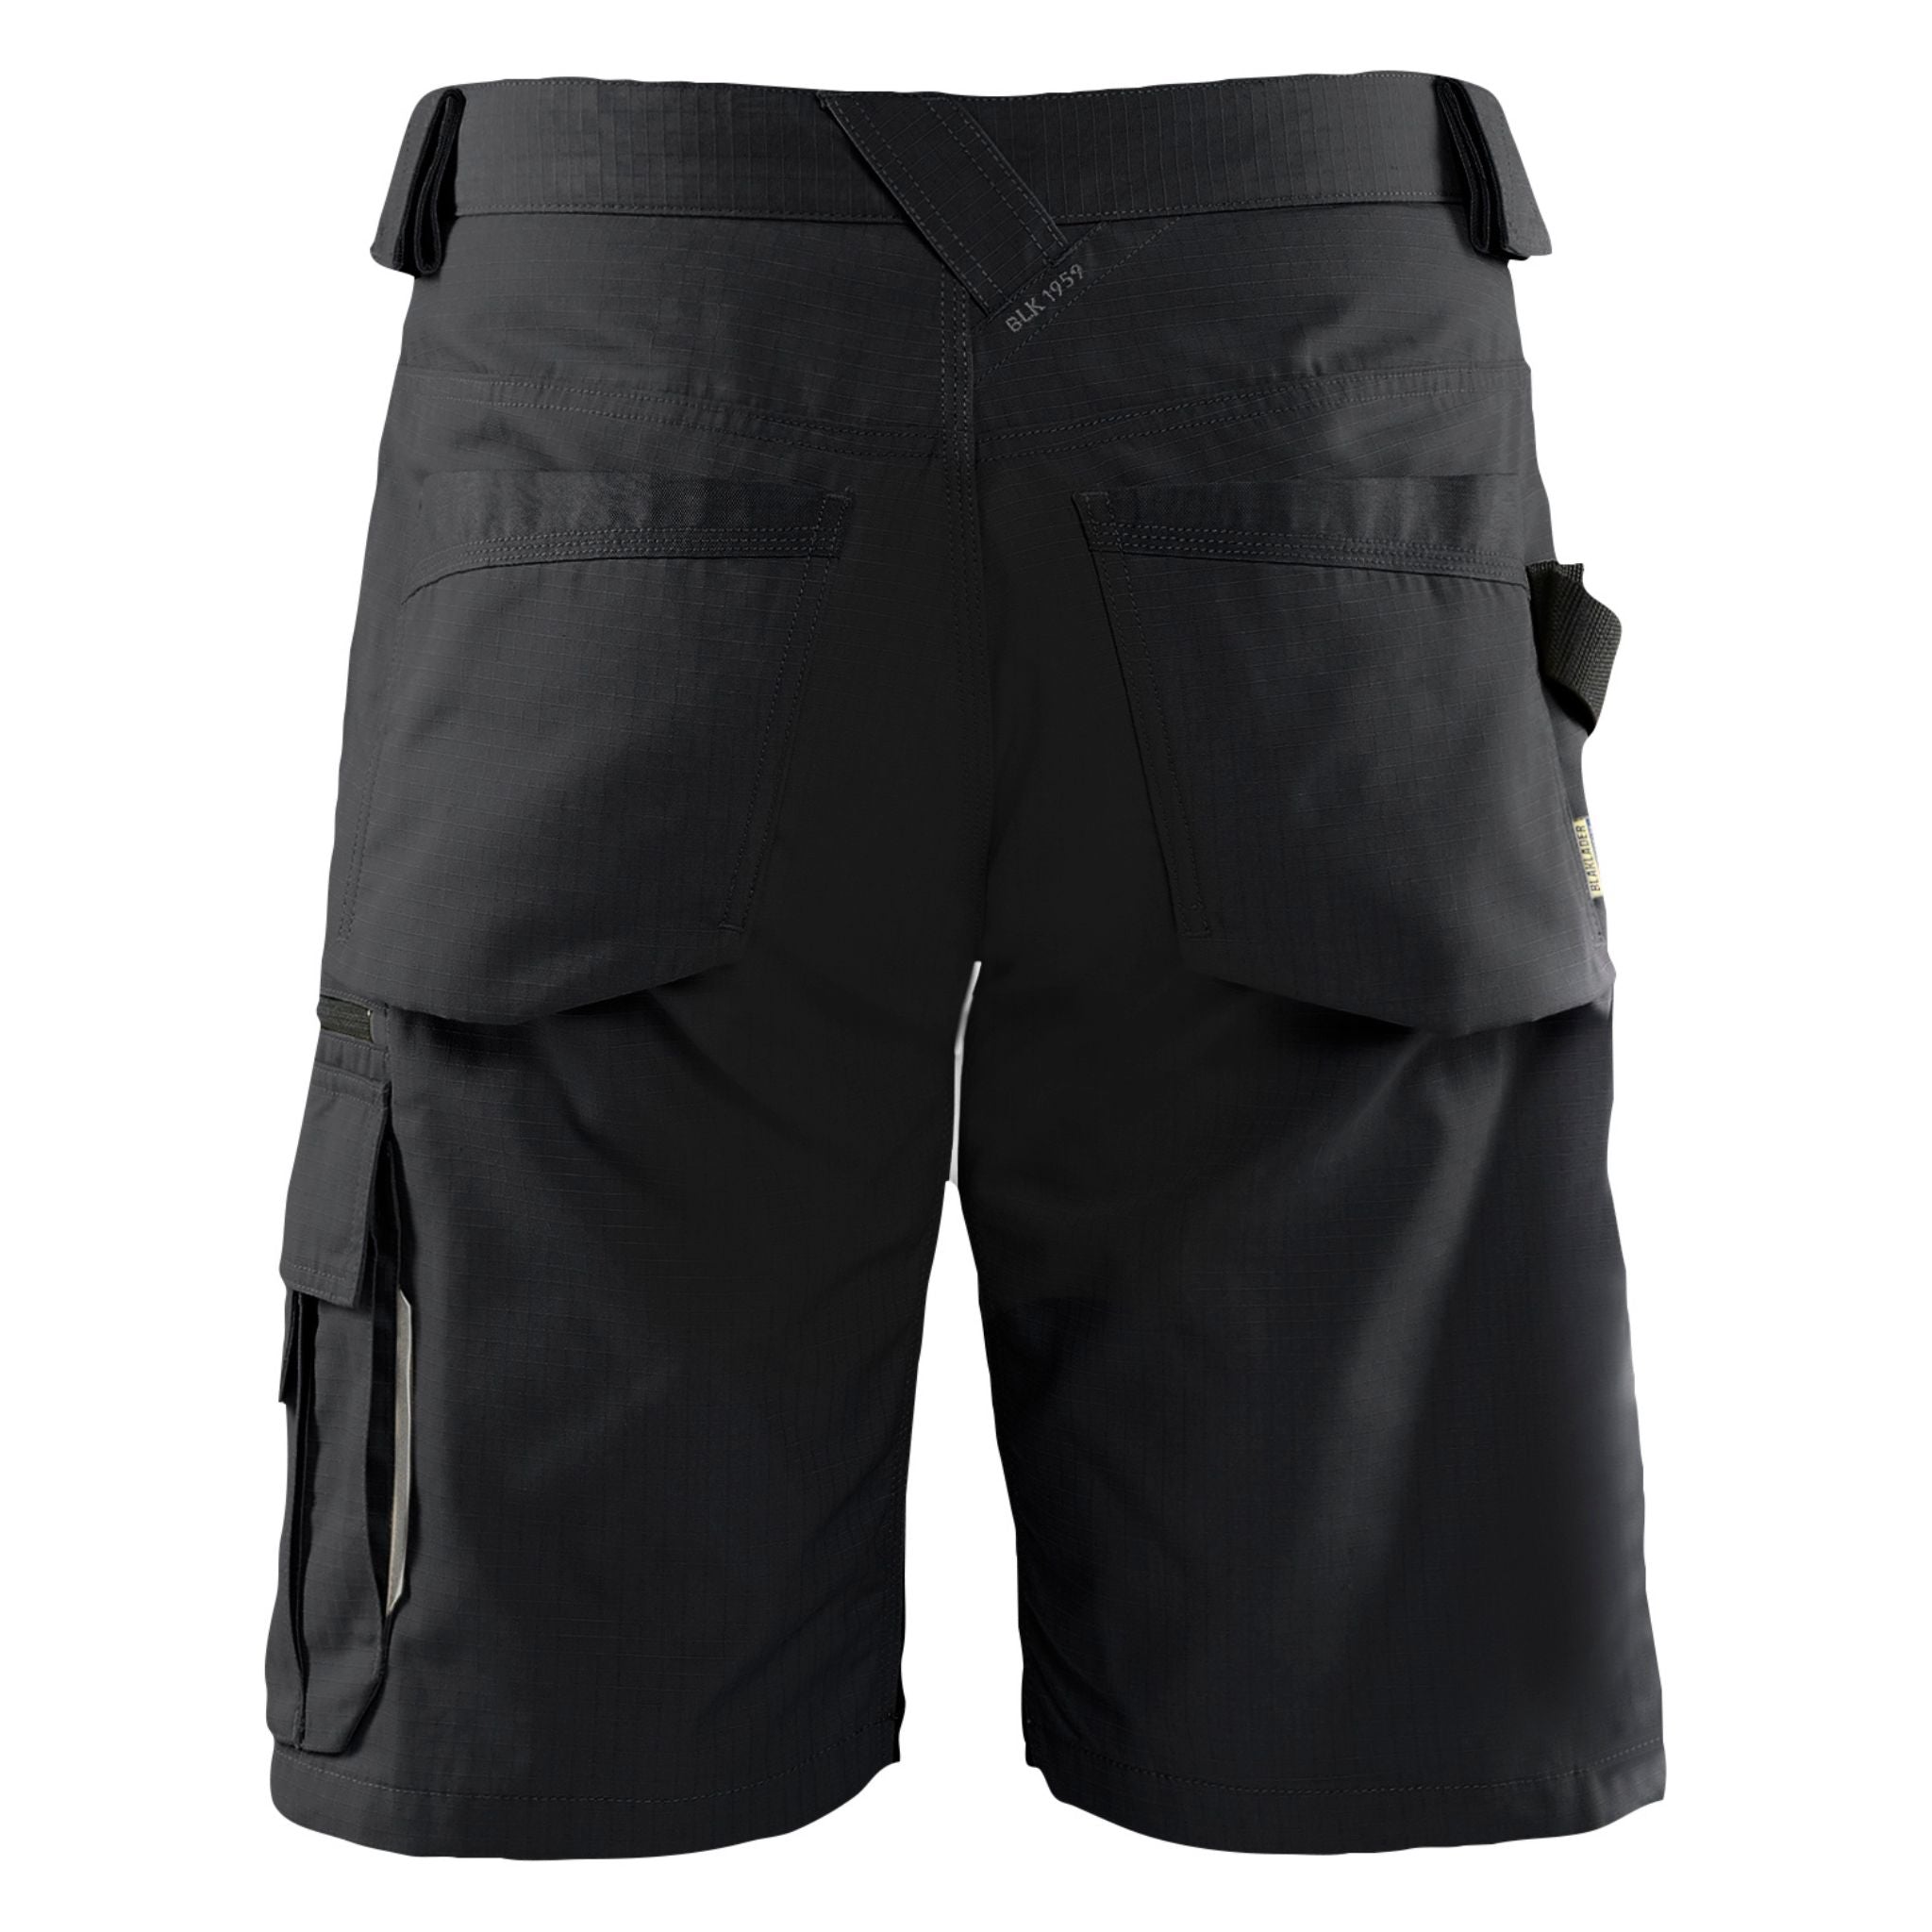 Men's black pocketed ripstop work shorts